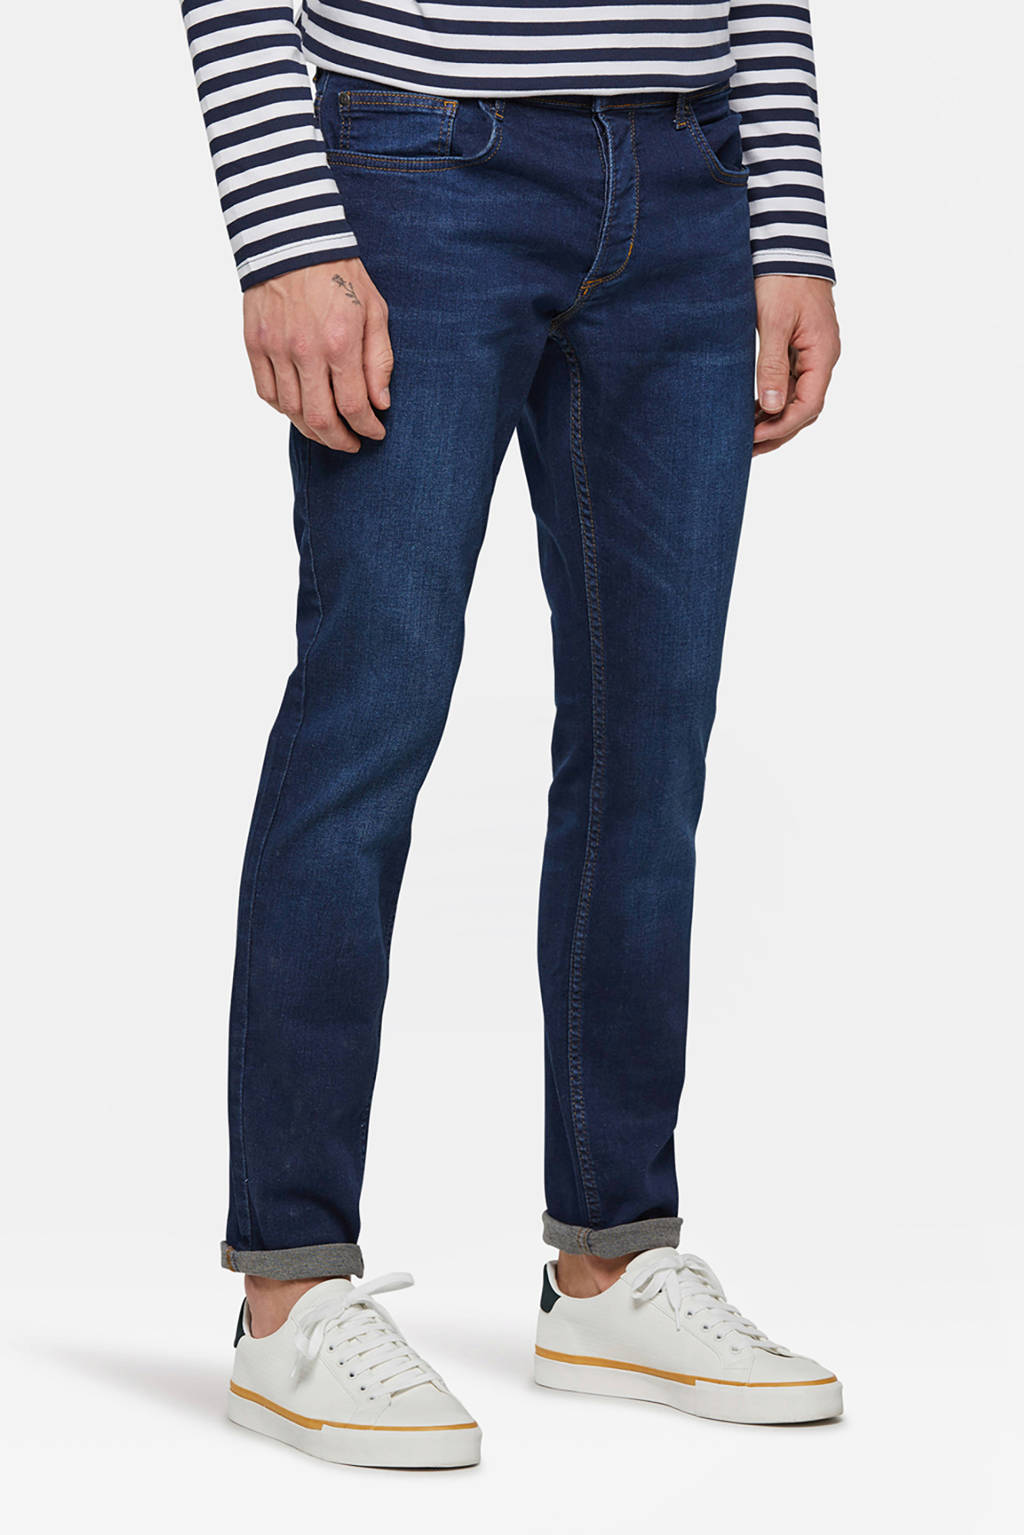 Sceptisch Voorbijgaand knuffel WE Fashion Blue Ridge slim fit tapered jeans Dex Sloane | wehkamp